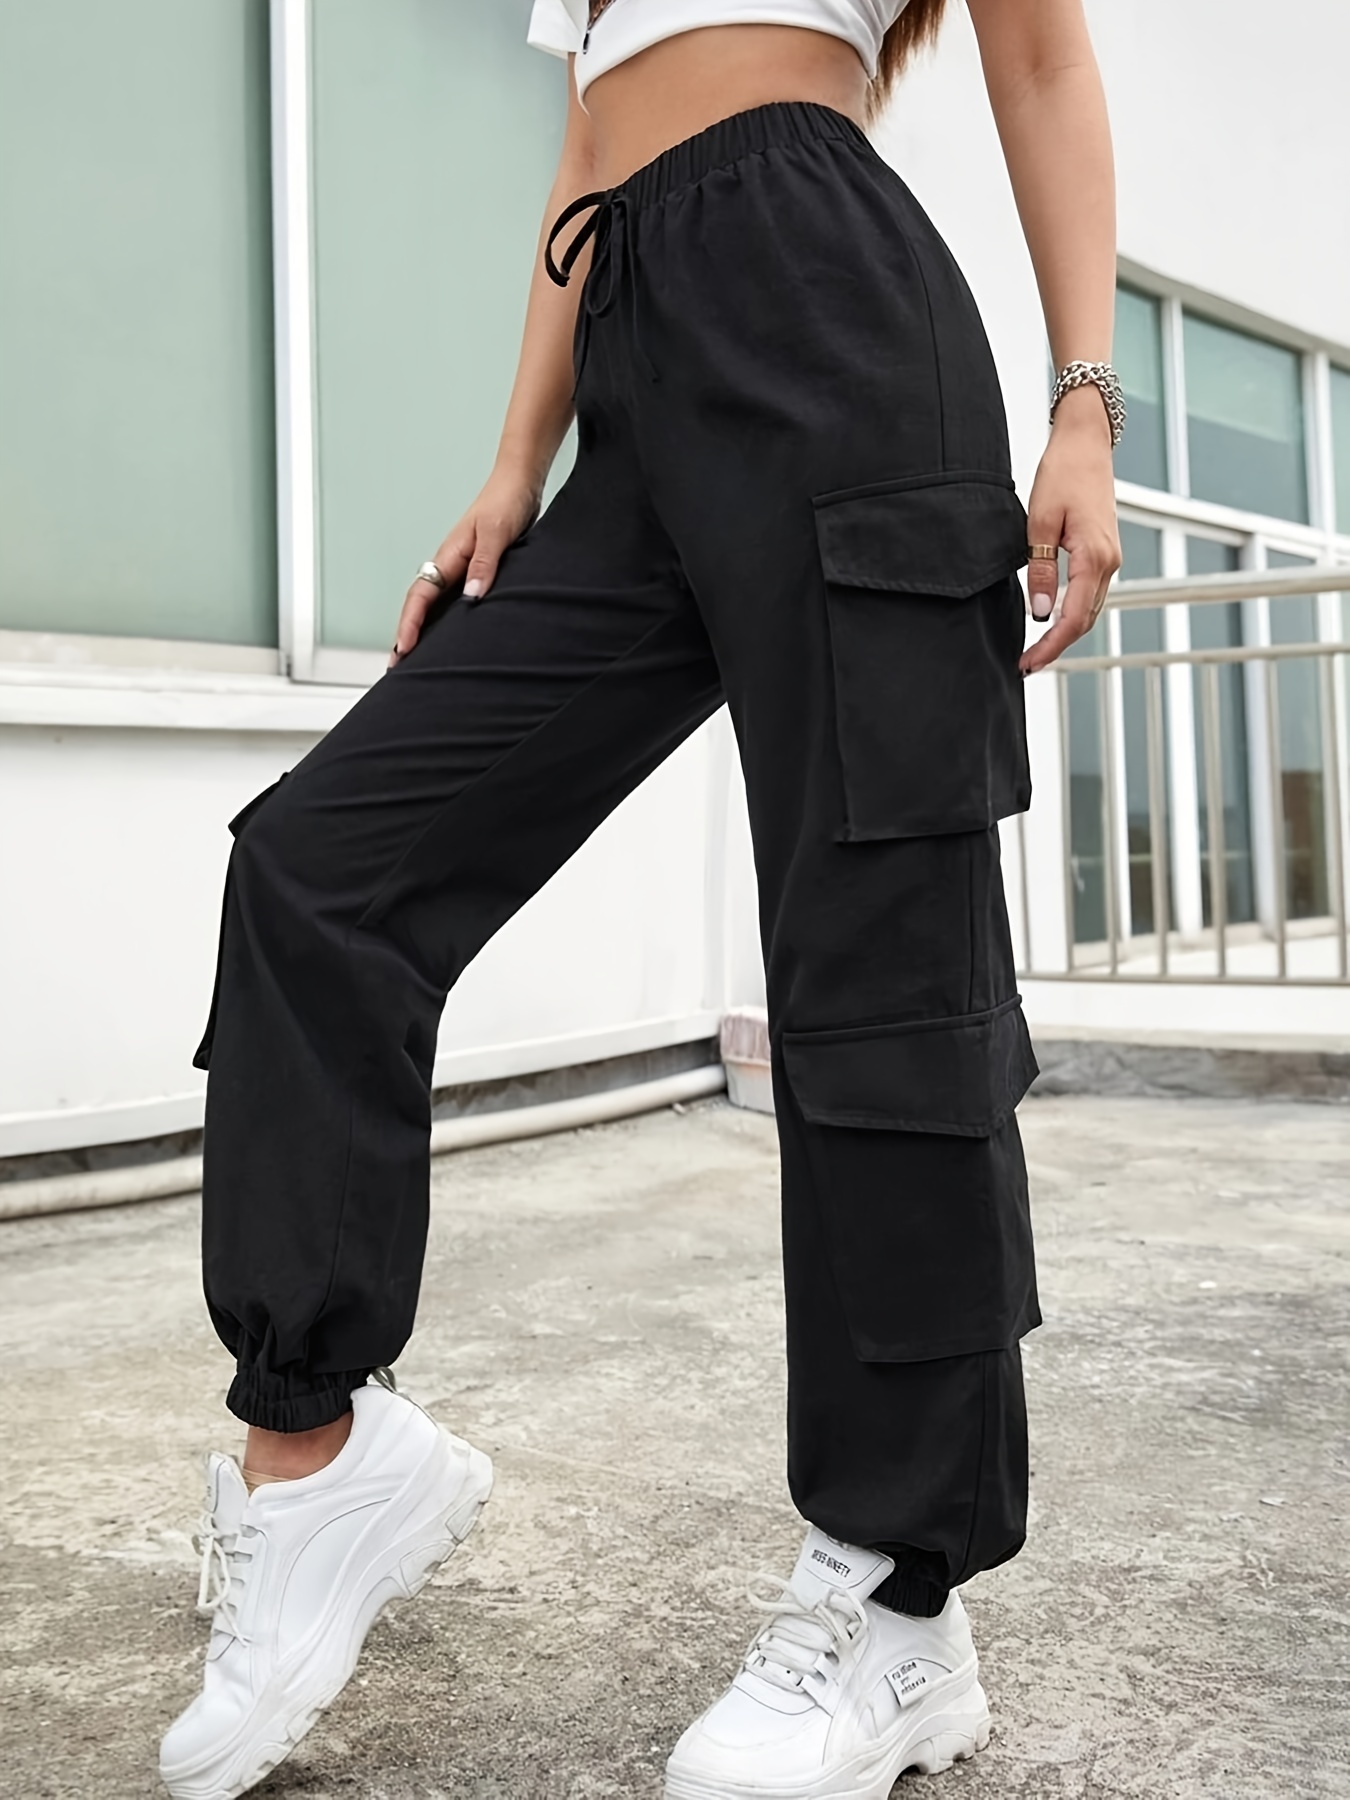 Cargo sweatpants for women Fashion Women's Drawstring Pocket